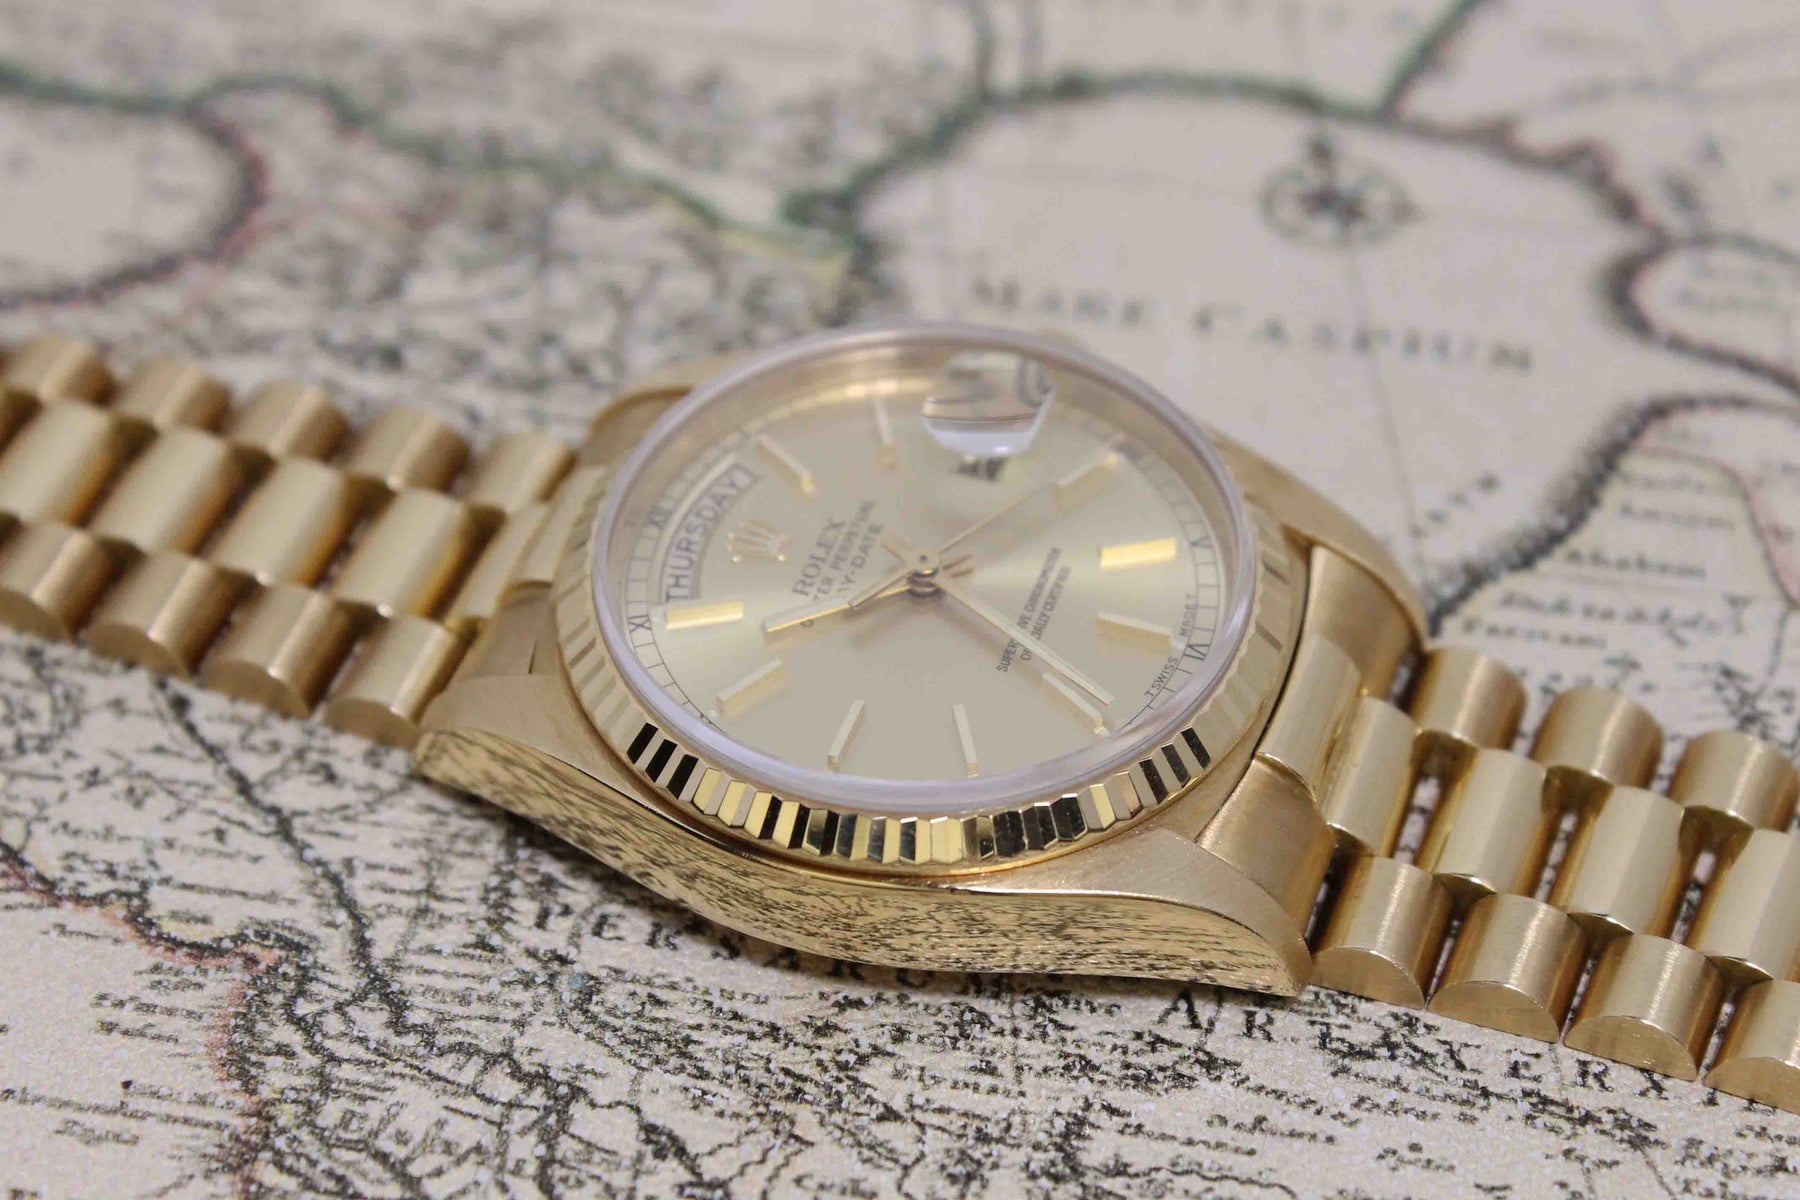 1979 Rolex Day Date Ref. 18038